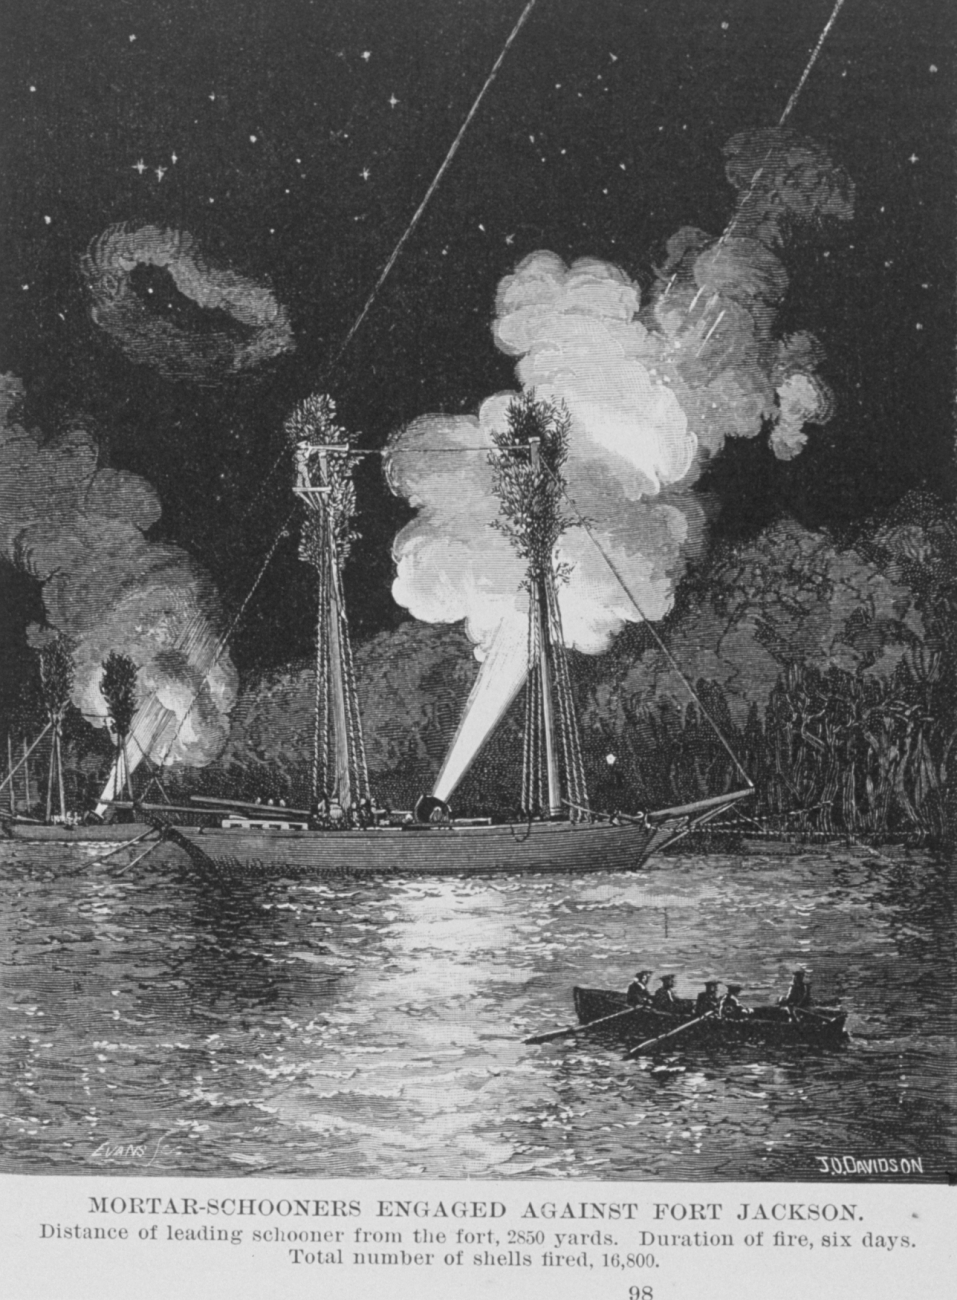 Mortar-schooners engaged against Fort Jackson